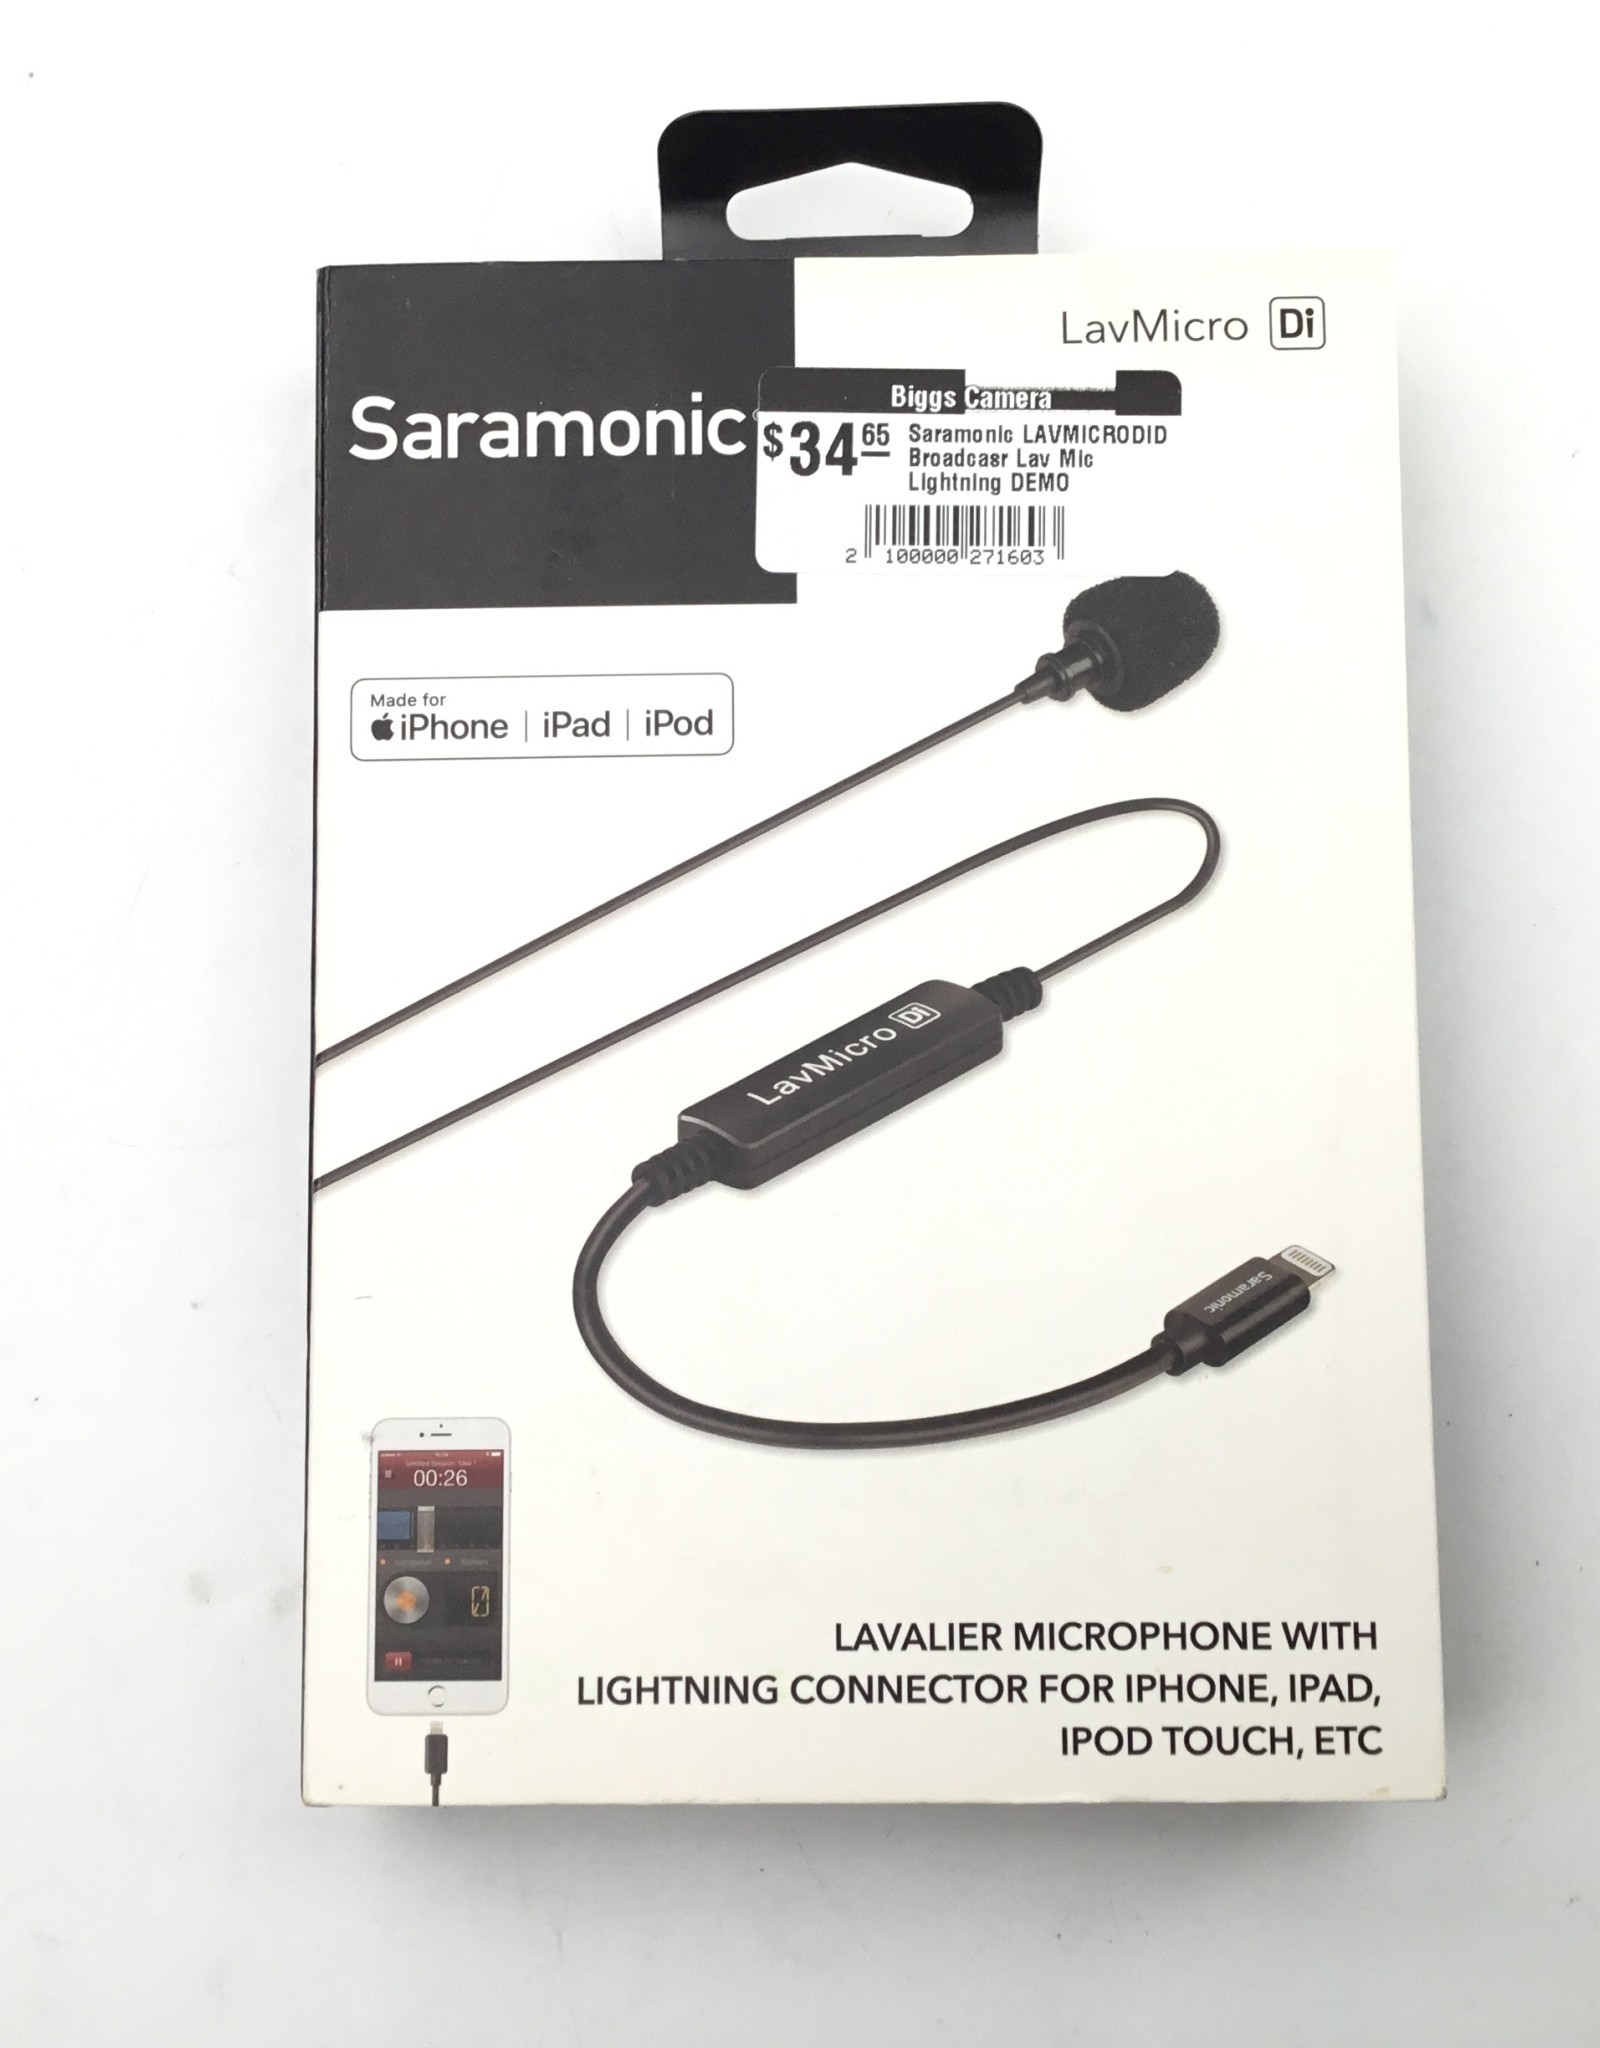 Saramonic LAVMICRODID Broadcasr Lav Mic Lightning DEMO